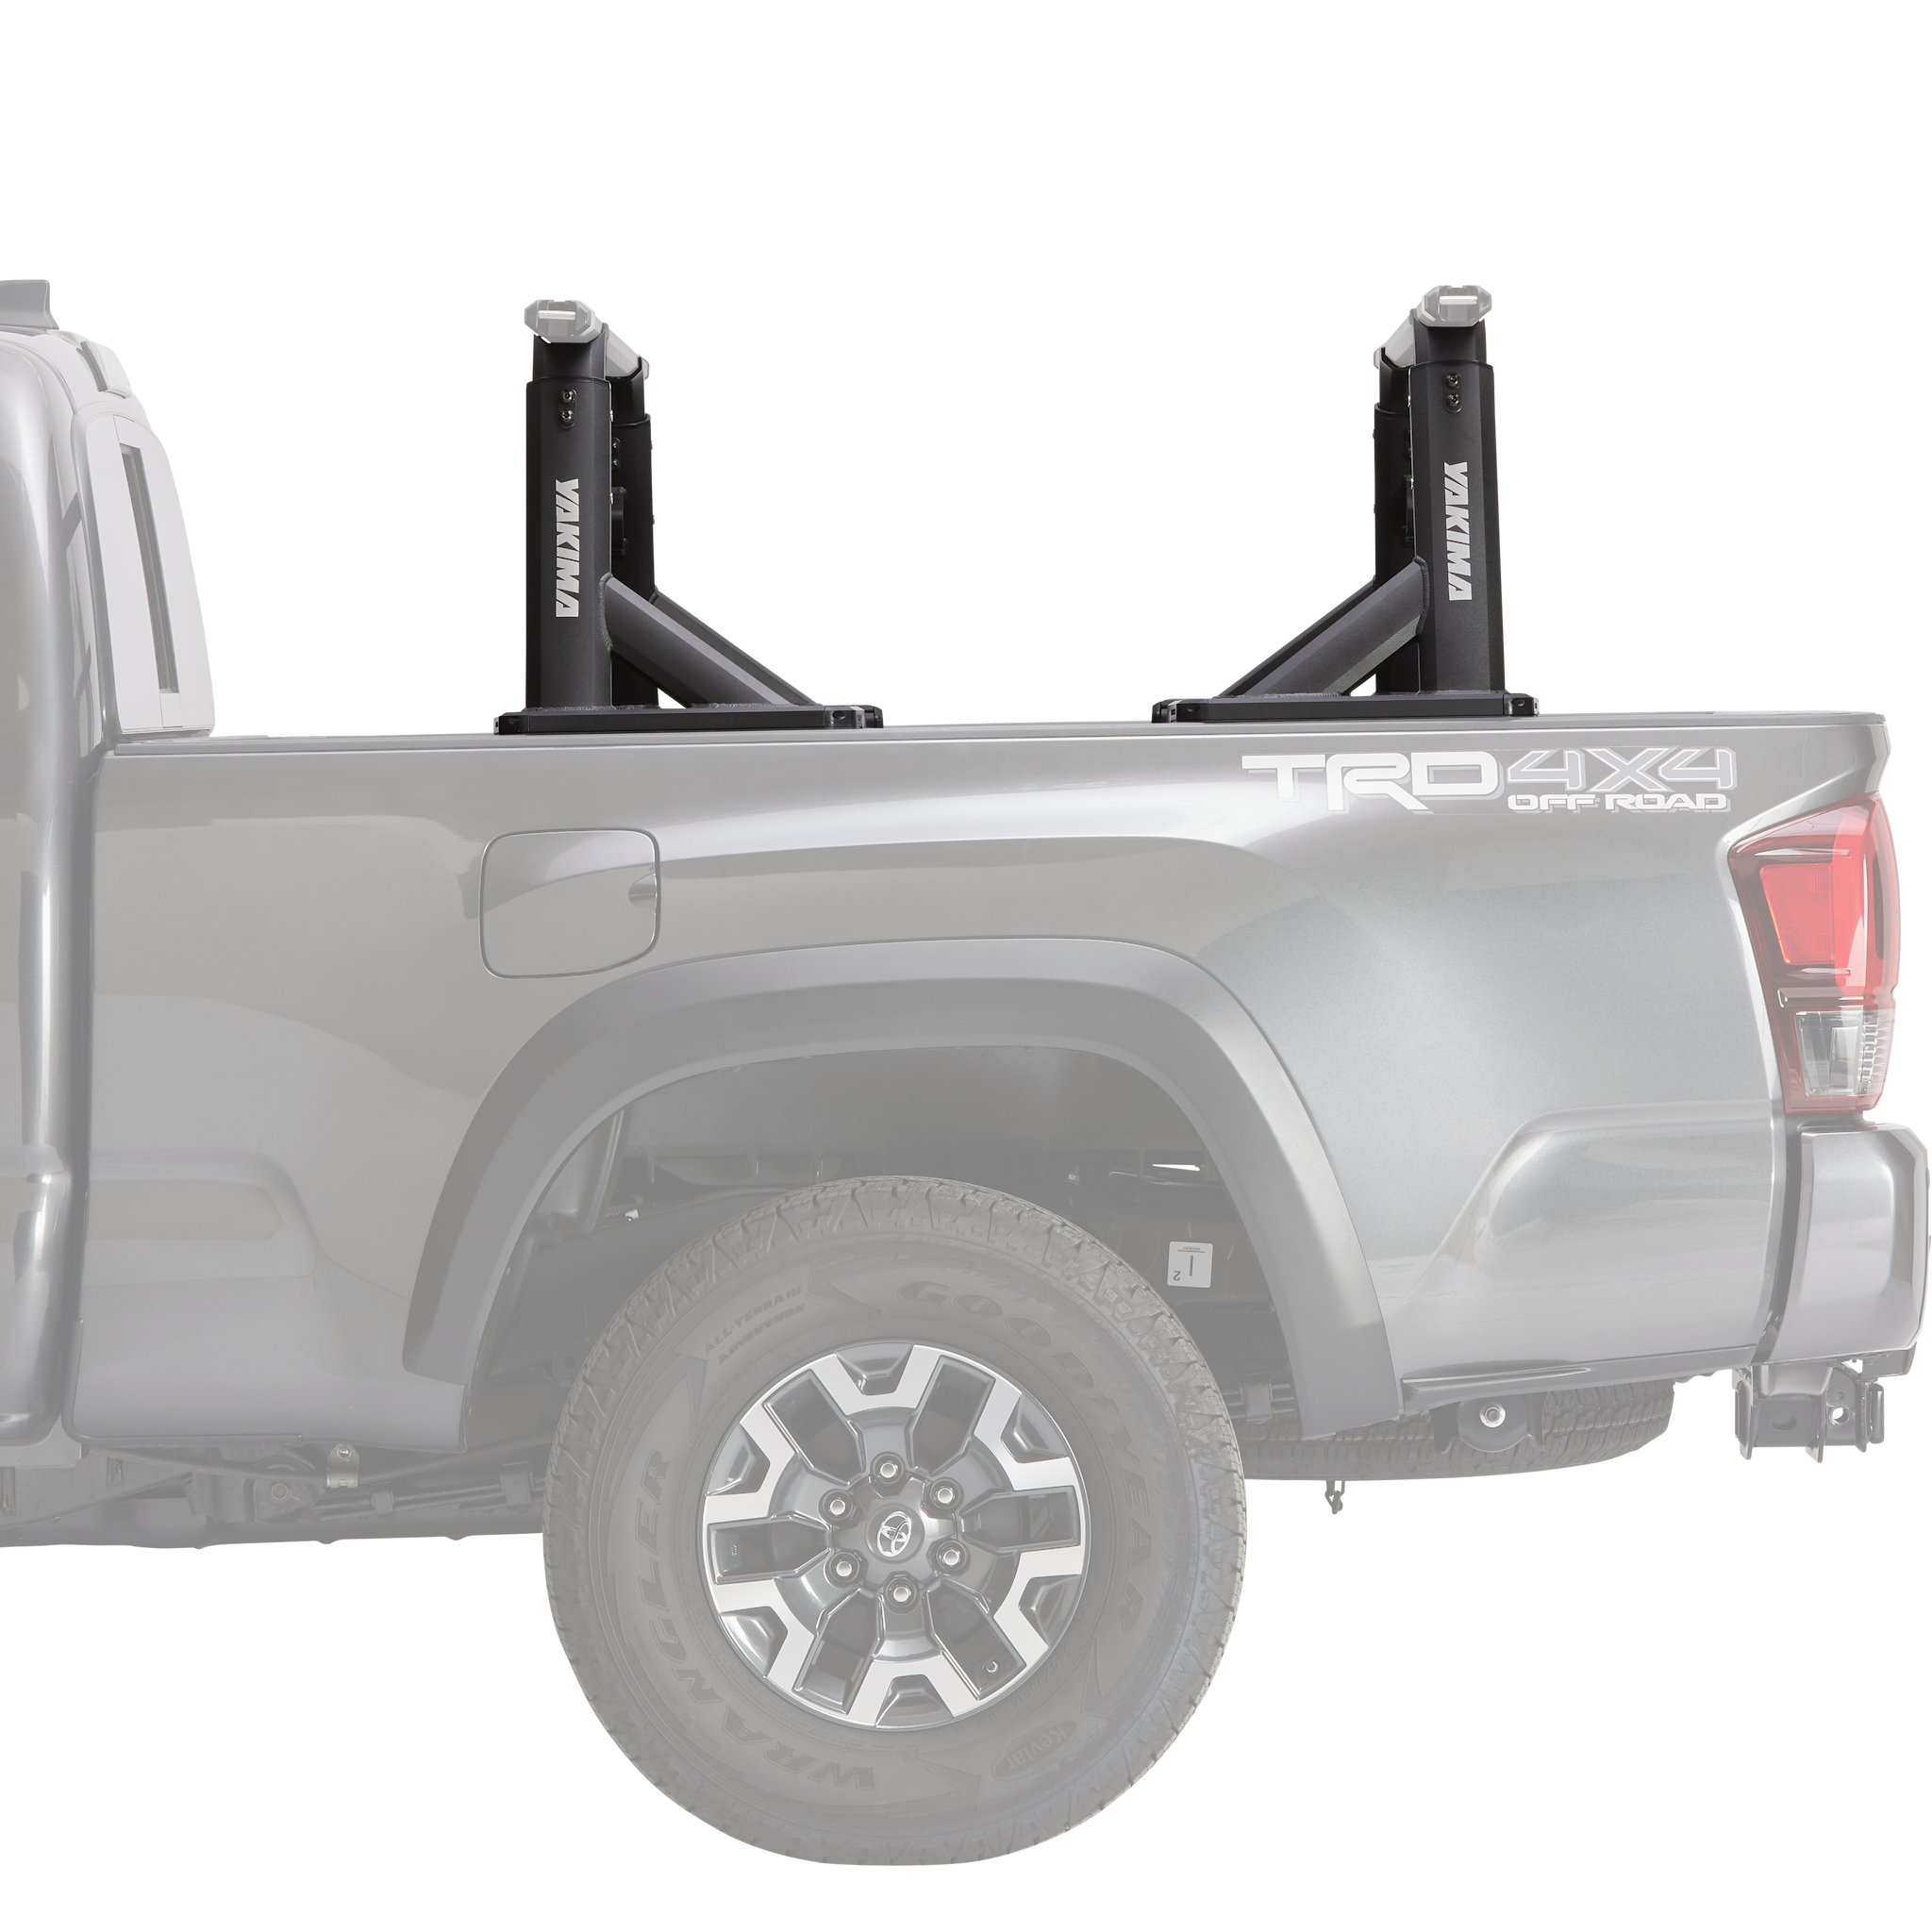 Overhaul HD truck rack side view height adjustability low